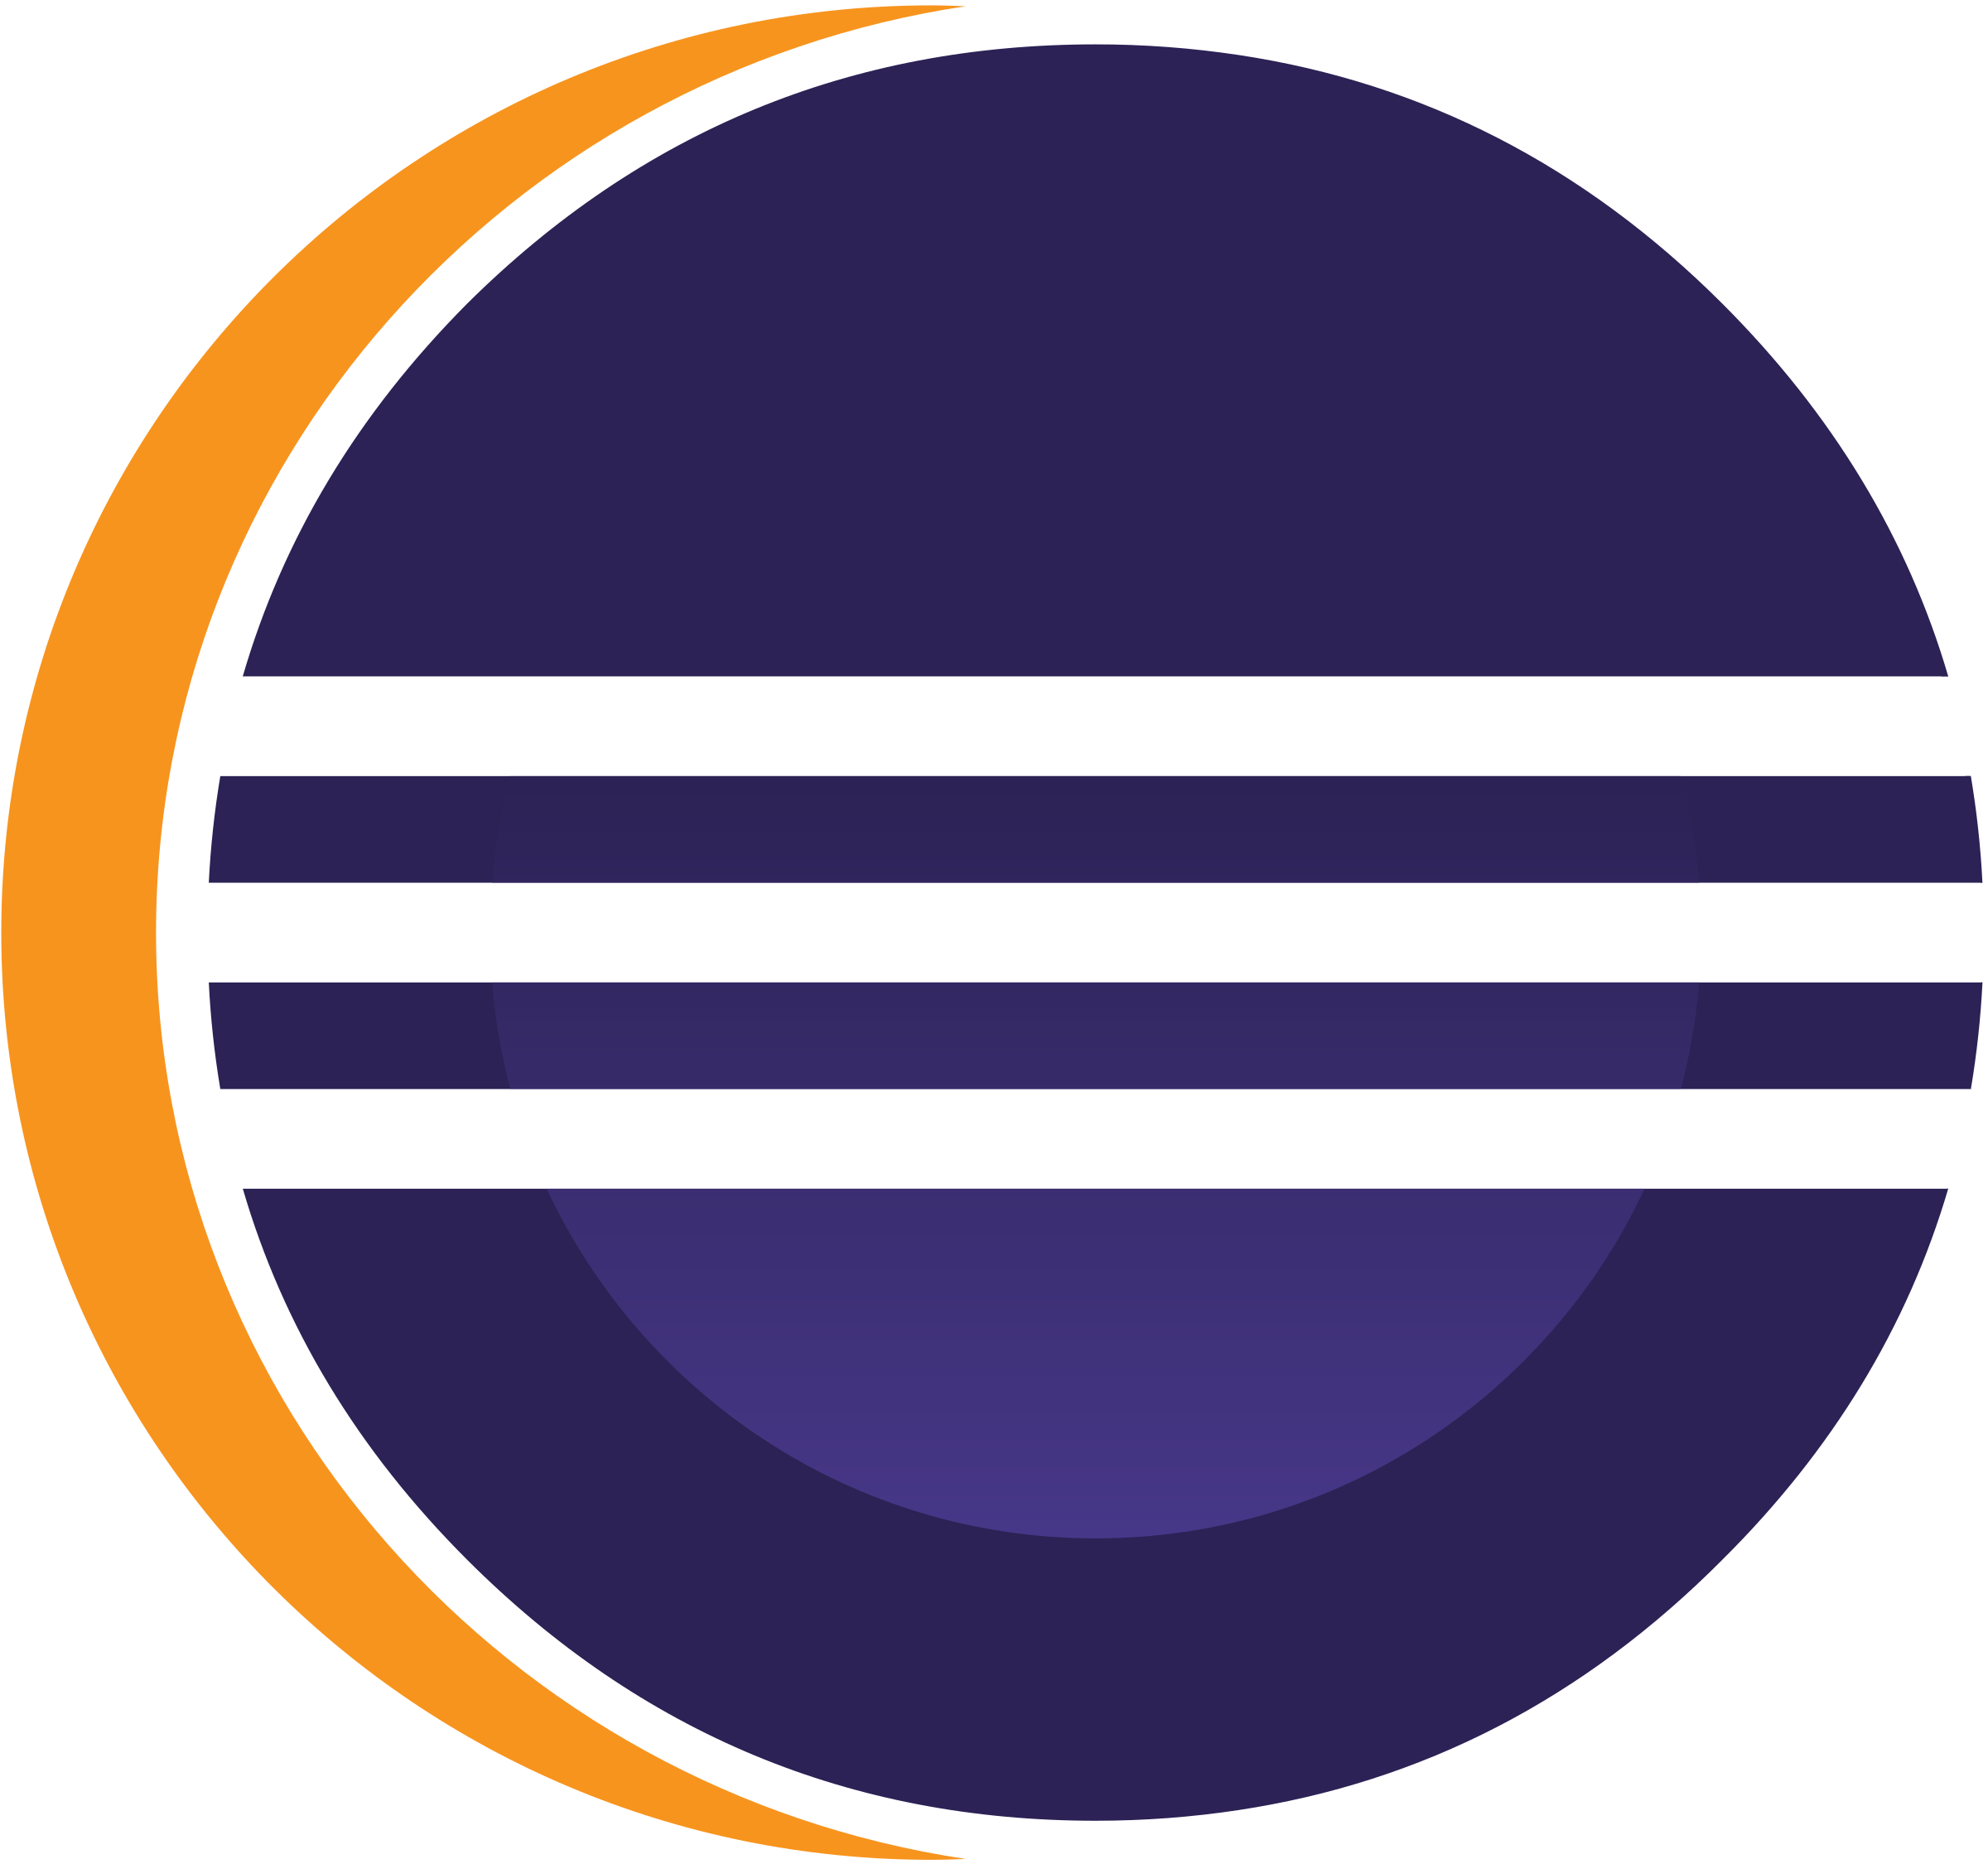 Eclipse Logo - Eclipse Logo PNG Transparent & SVG Vector